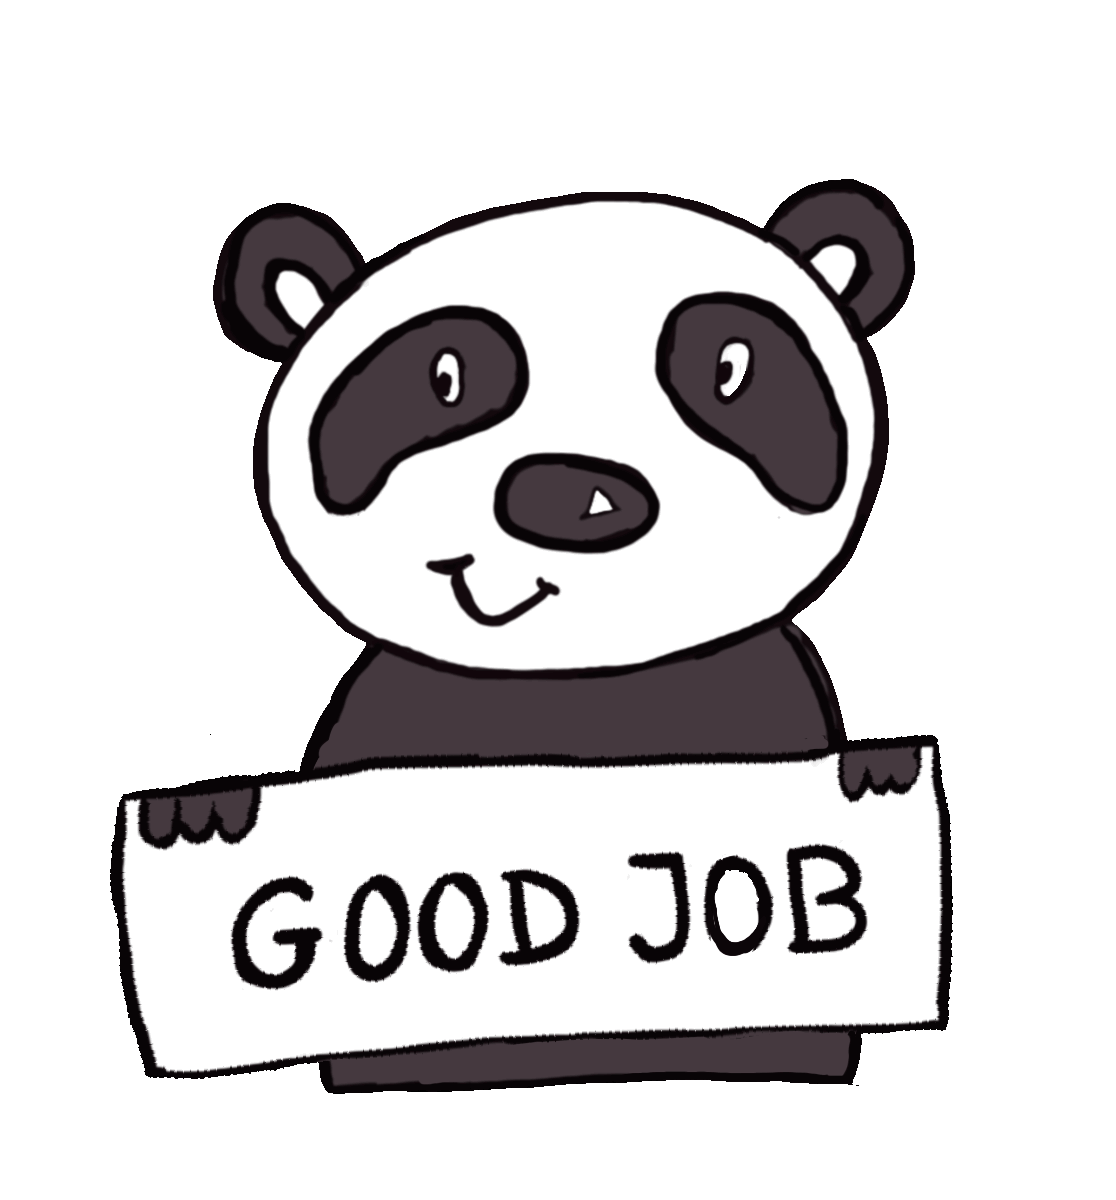 Good Job panda